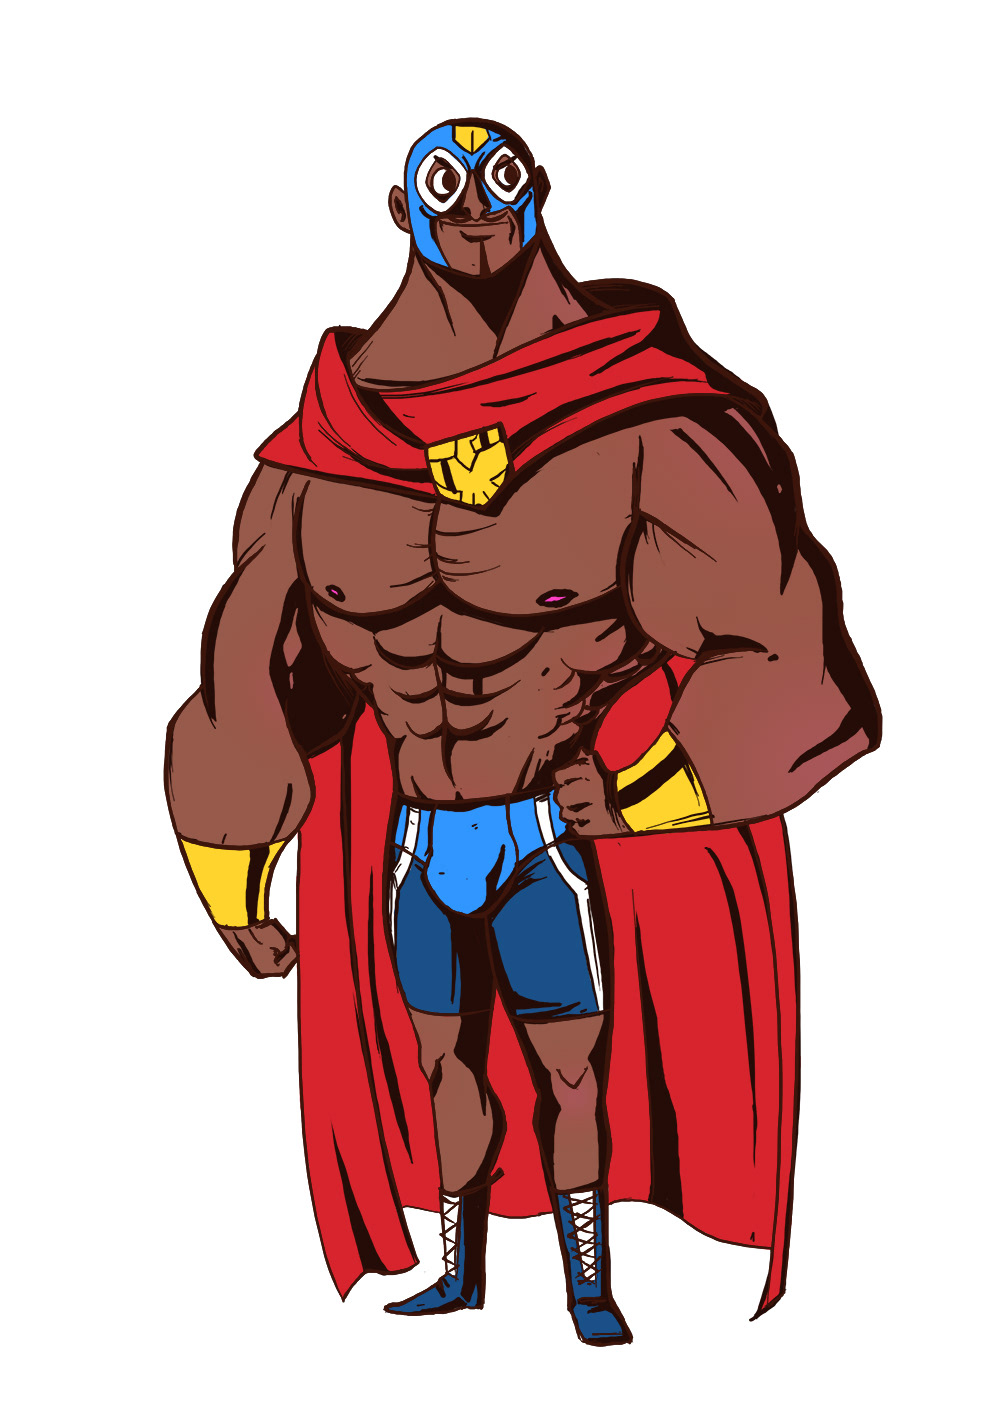 macho mask Wrestling Hero cool awsome buboo design doodle muscle